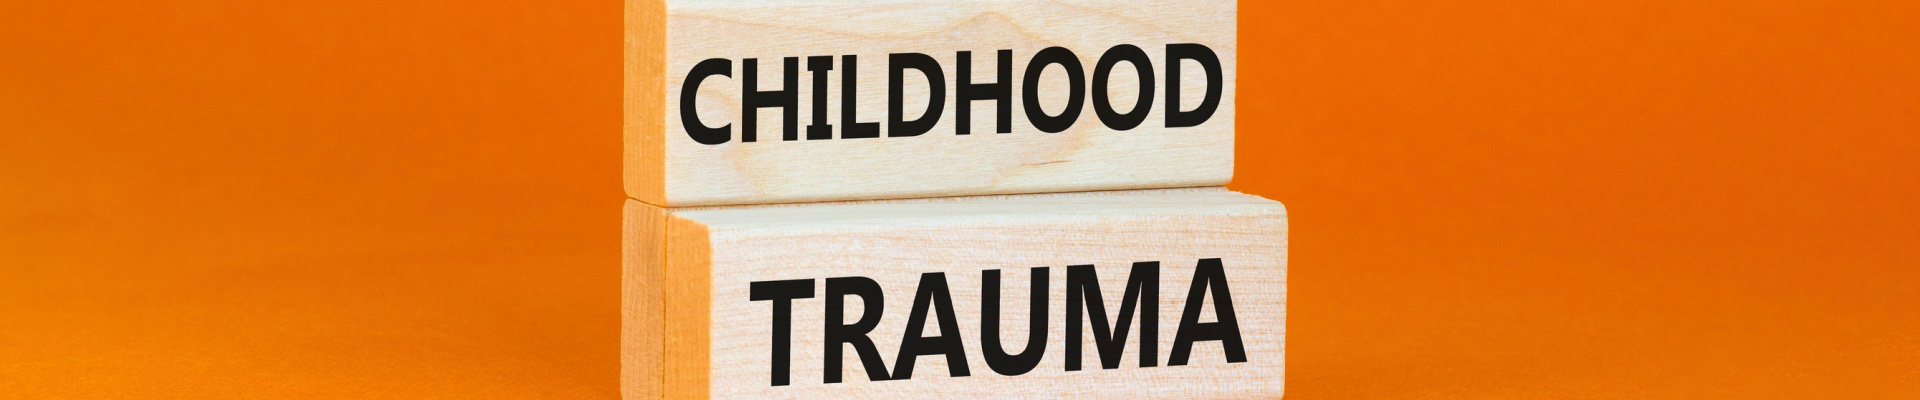 Childhood trauma symbol. Concept words Childhood trauma on beautiful wooden blocks. Beautiful orange table orange background. Business psychology childhood trauma concept. Copy space.